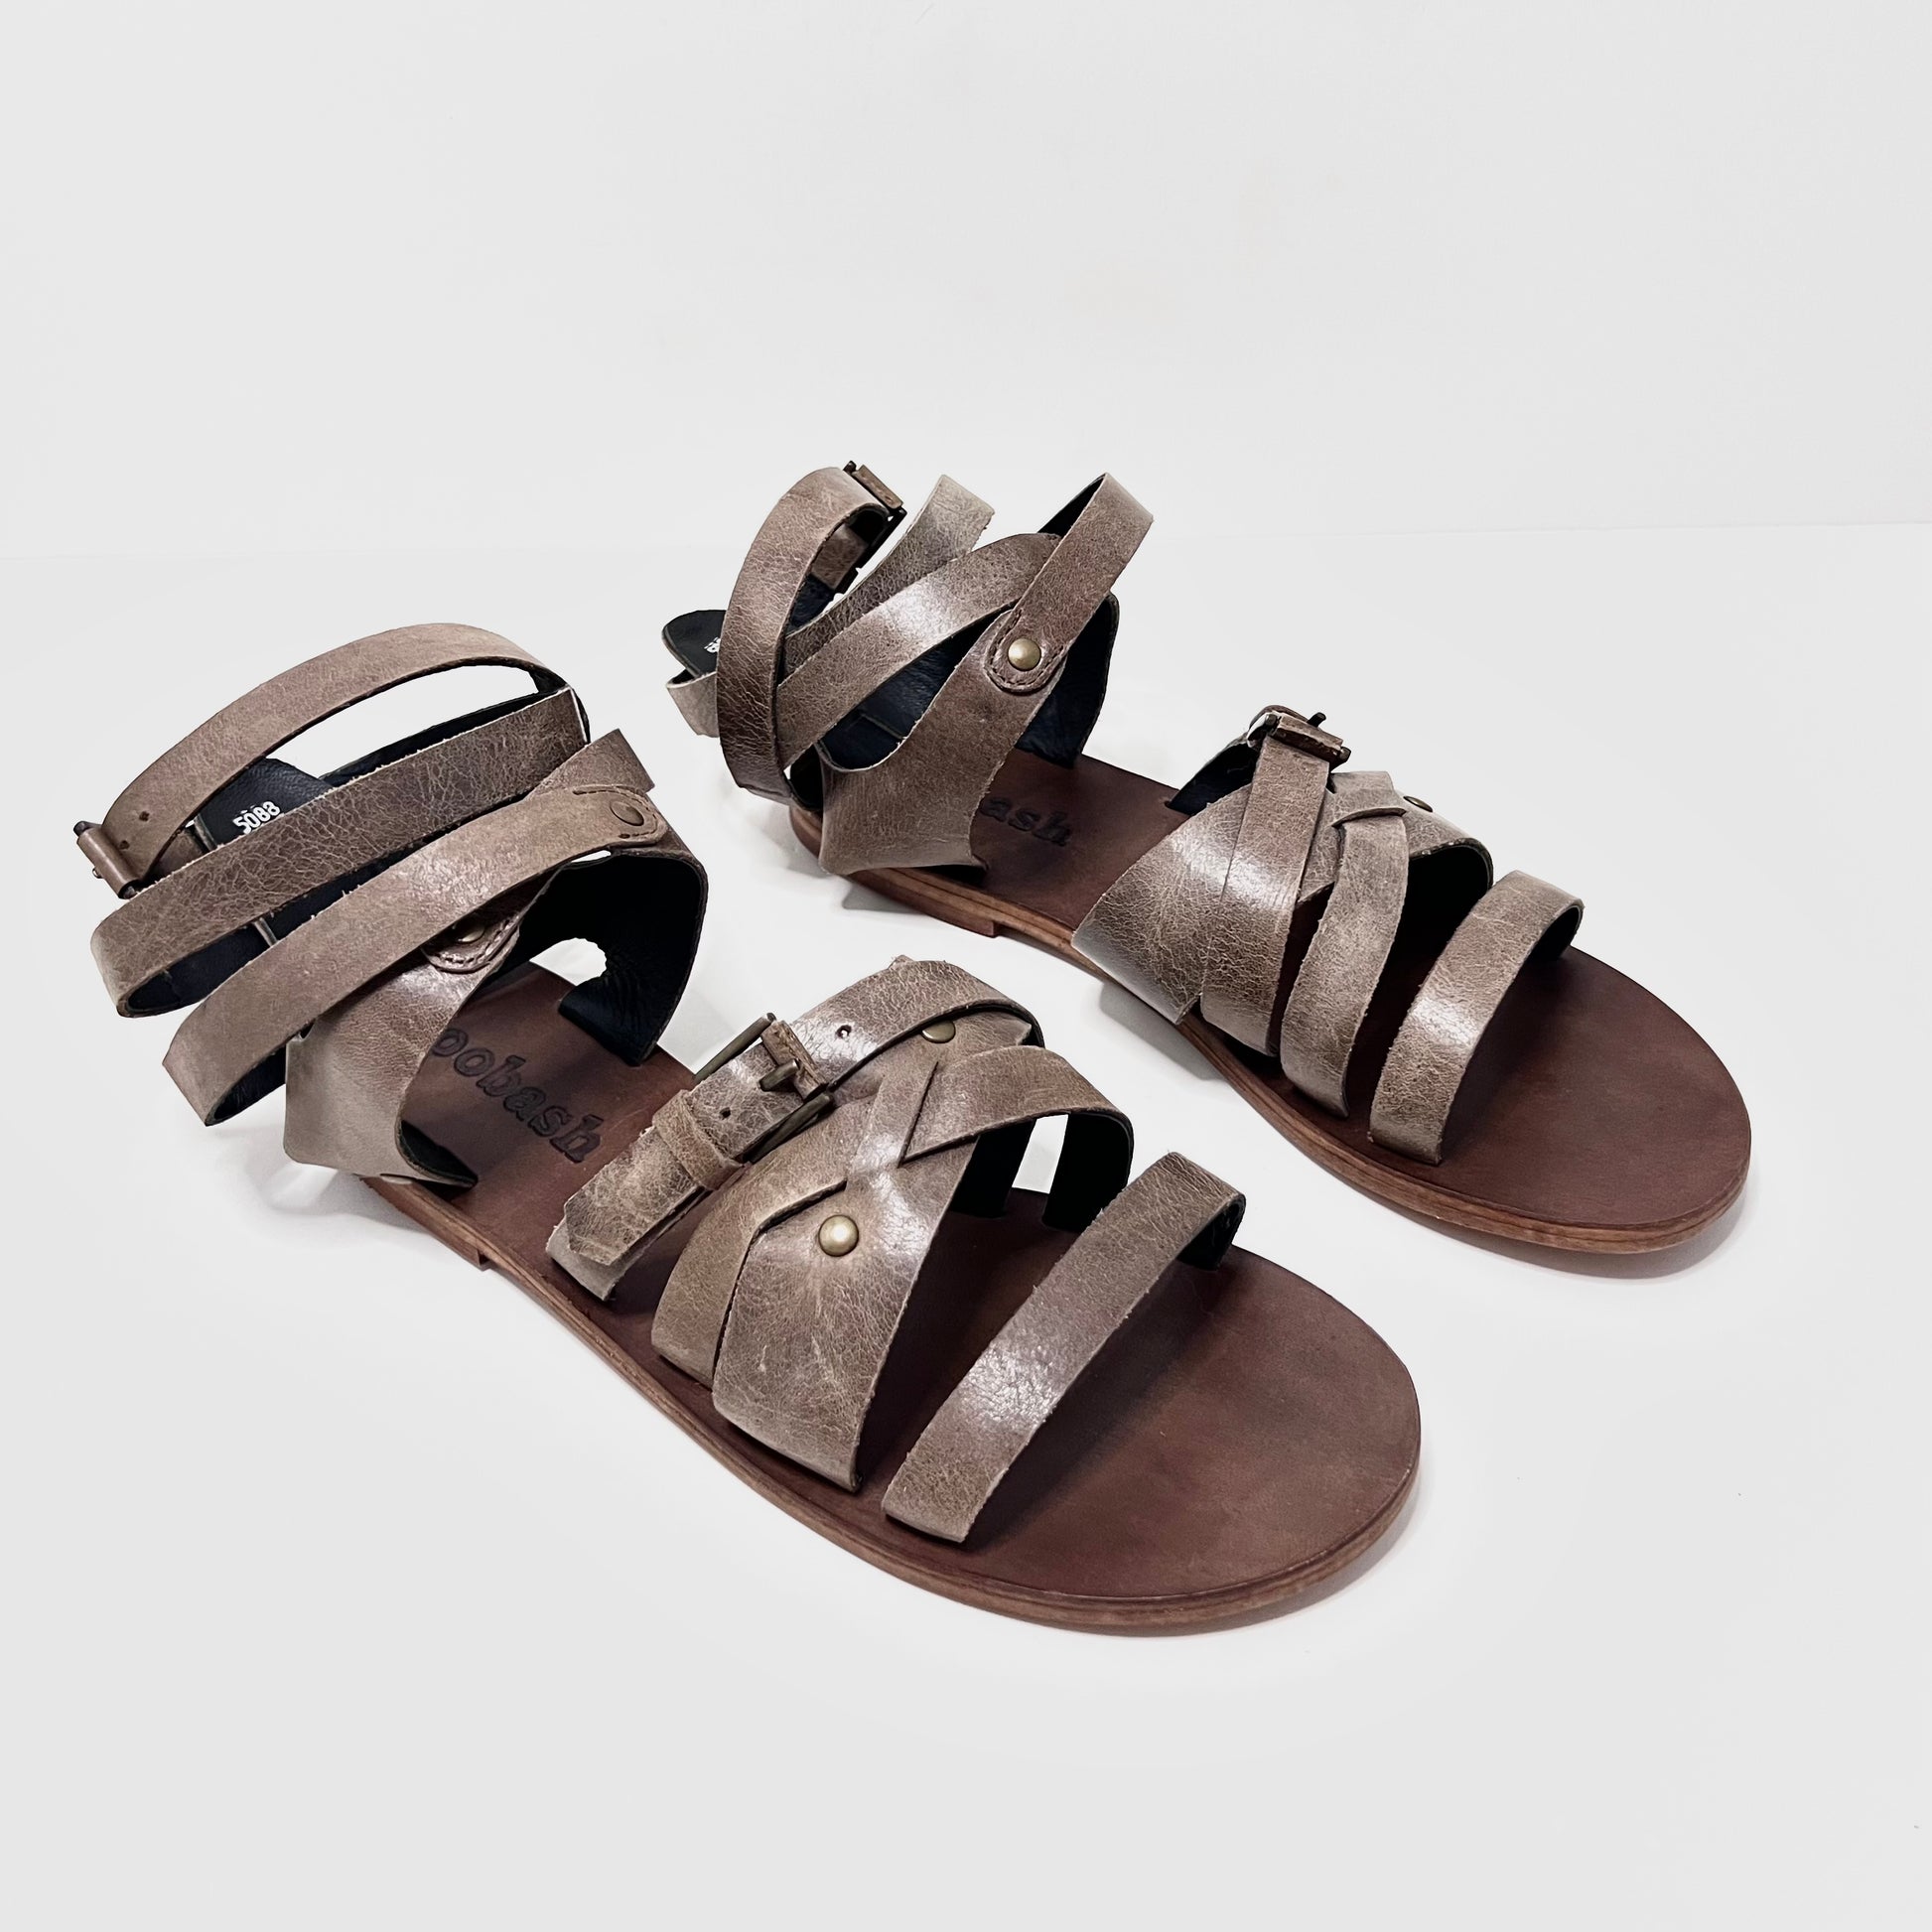 oobash Ariel gladitor leather sandal in olive color for ladies girl women